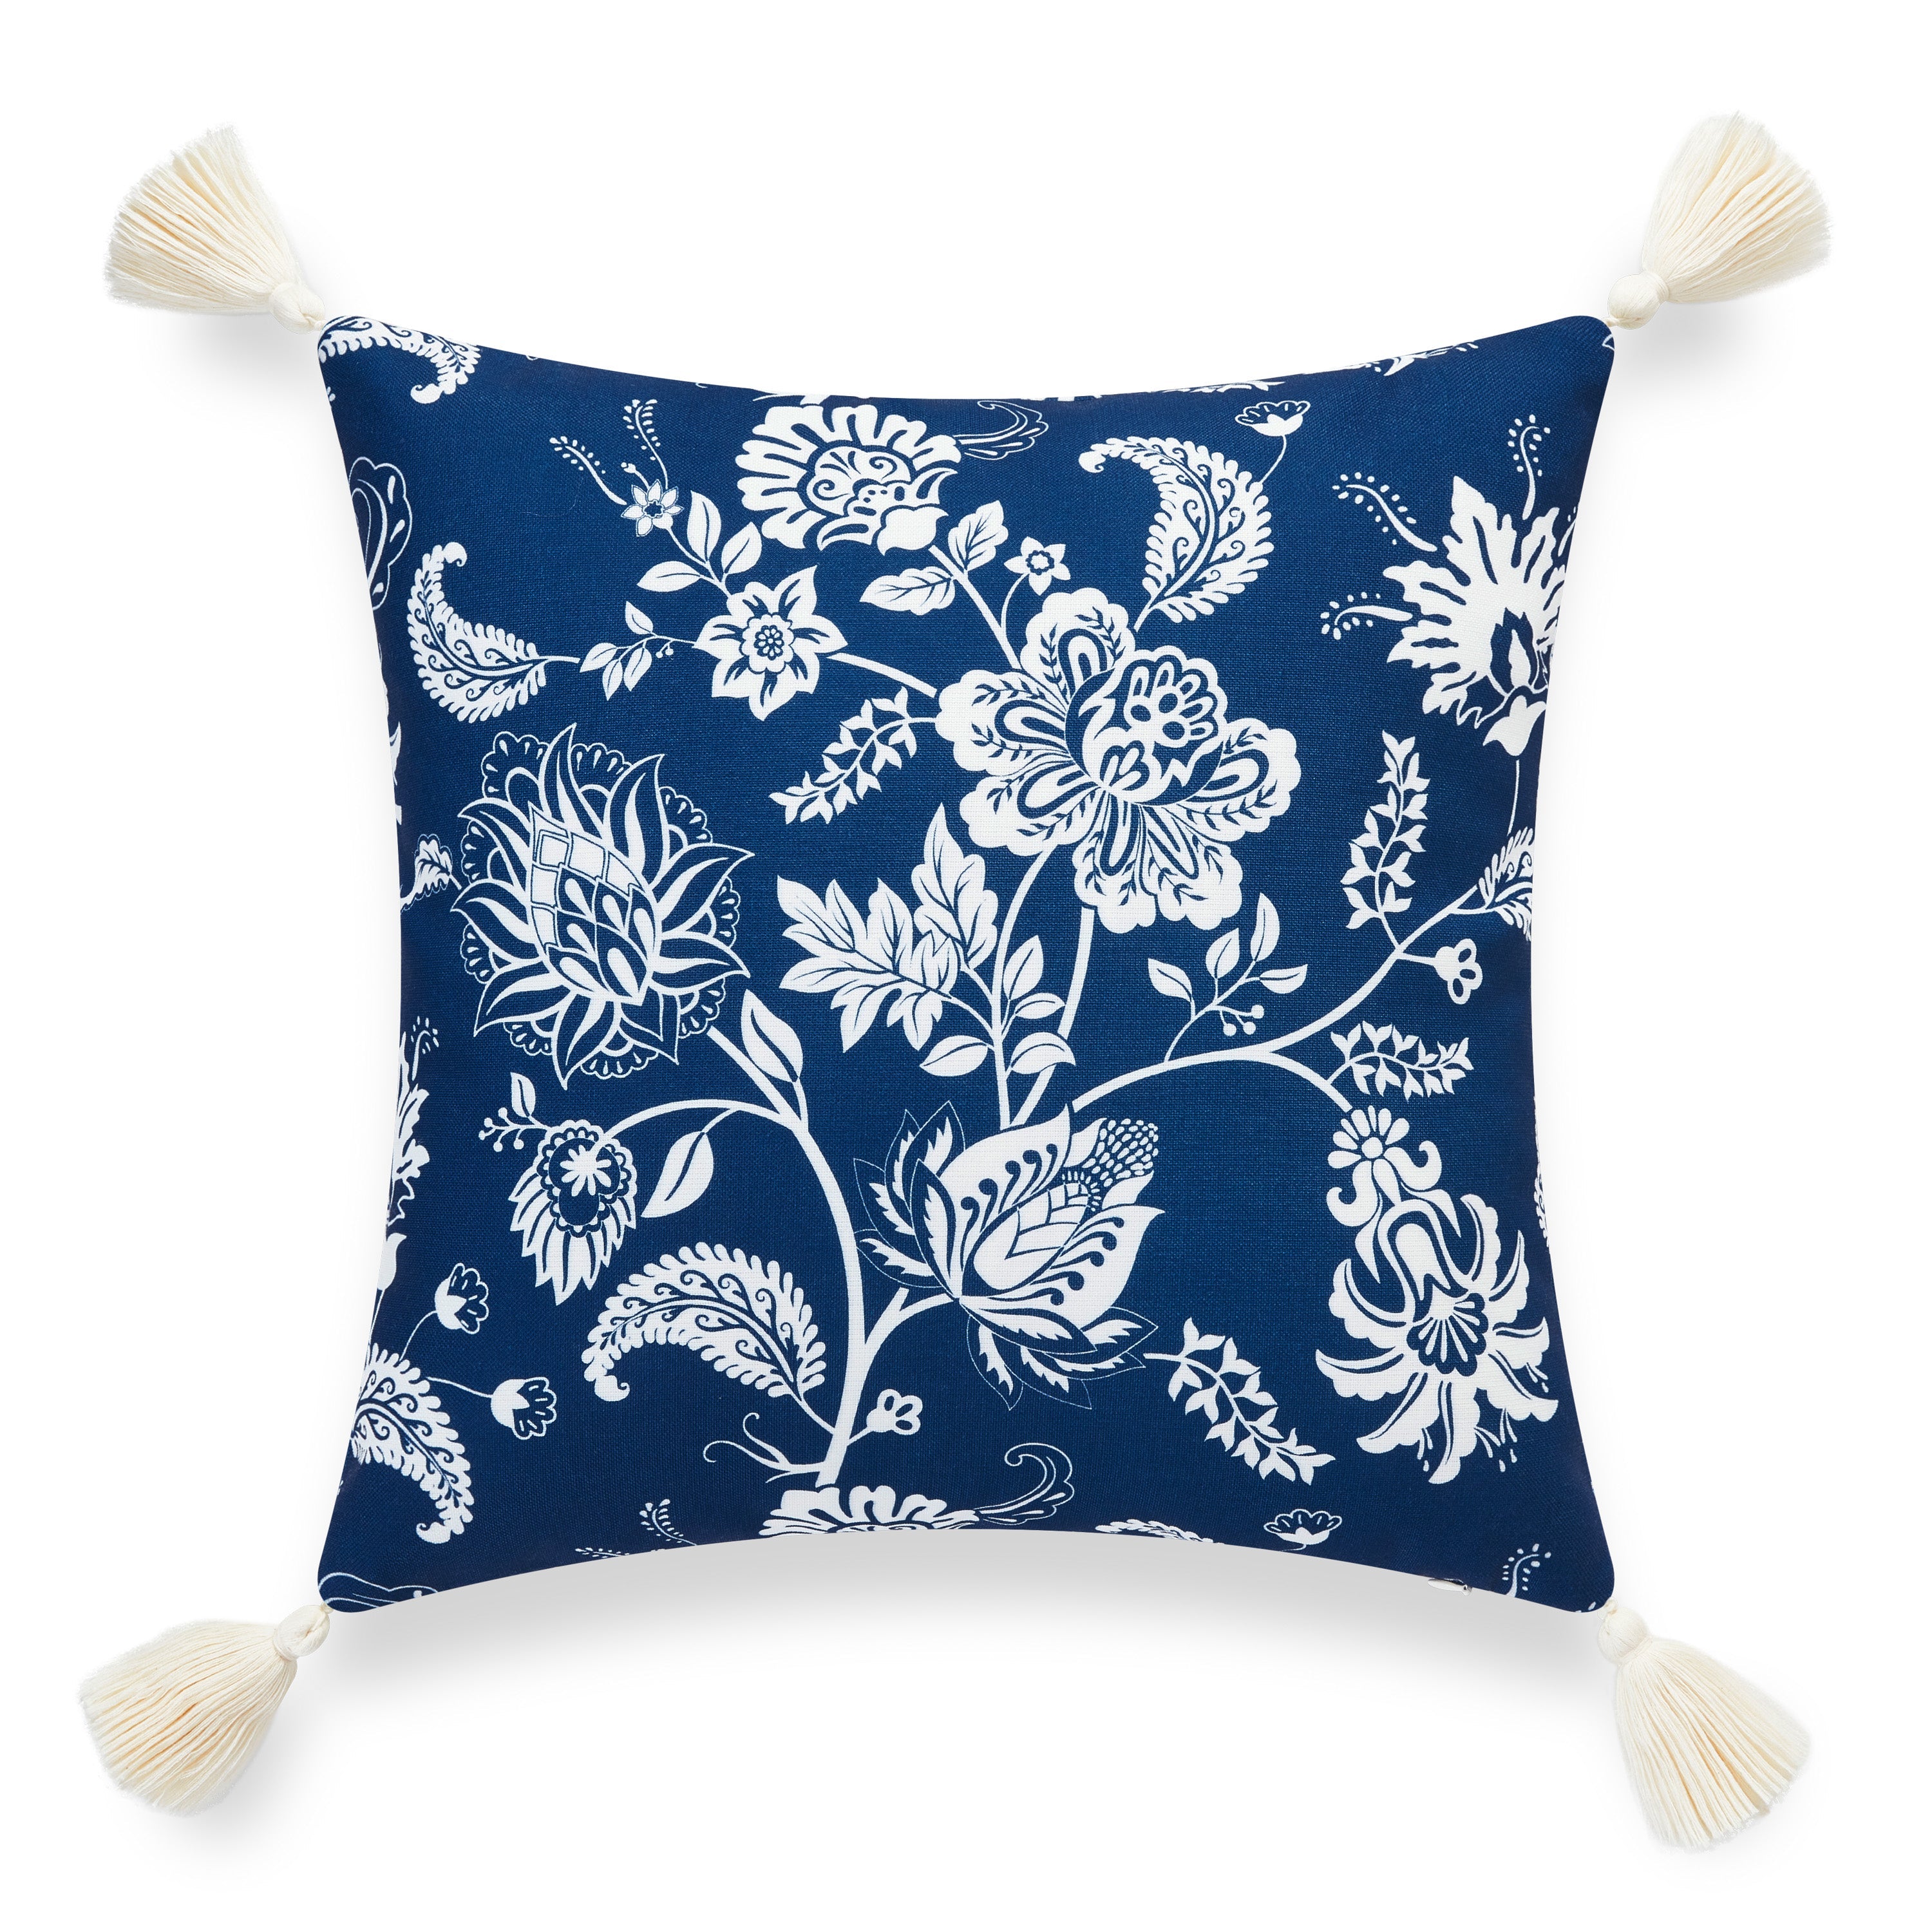 Coastal Hampton Style Indoor Outdoor Throw Pillow Cover, Floral Tassel, Navy Blue, 18"x18"